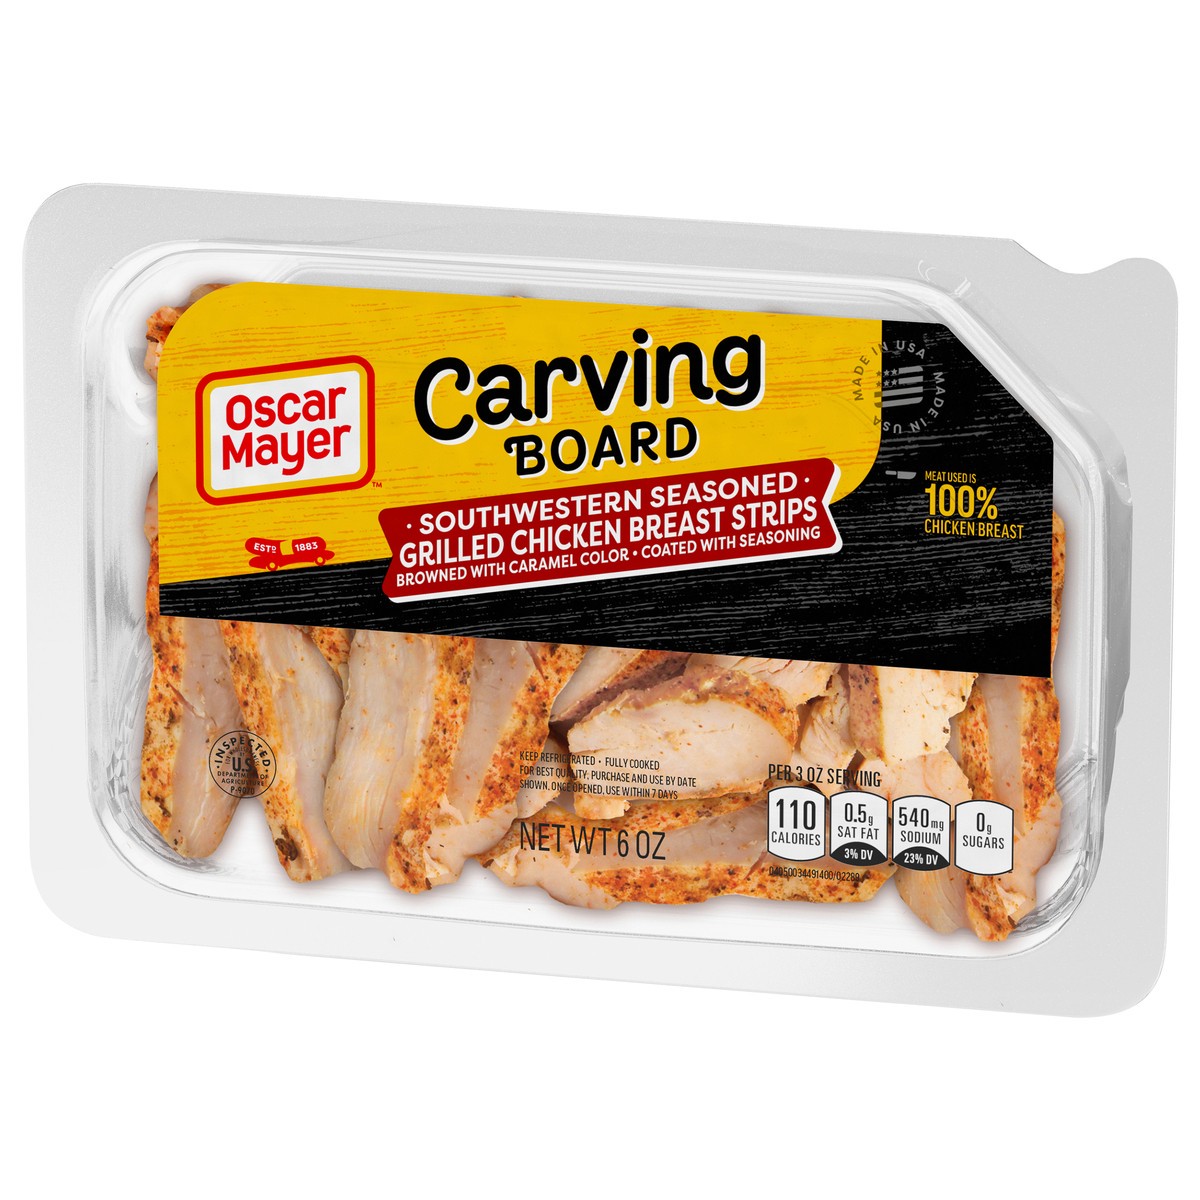 slide 4 of 9, Oscar Mayer Carving Board Southwestern Seasoned Grilled Chicken Breast Strips Lunch Meat, 6 oz. Tray, 6 oz